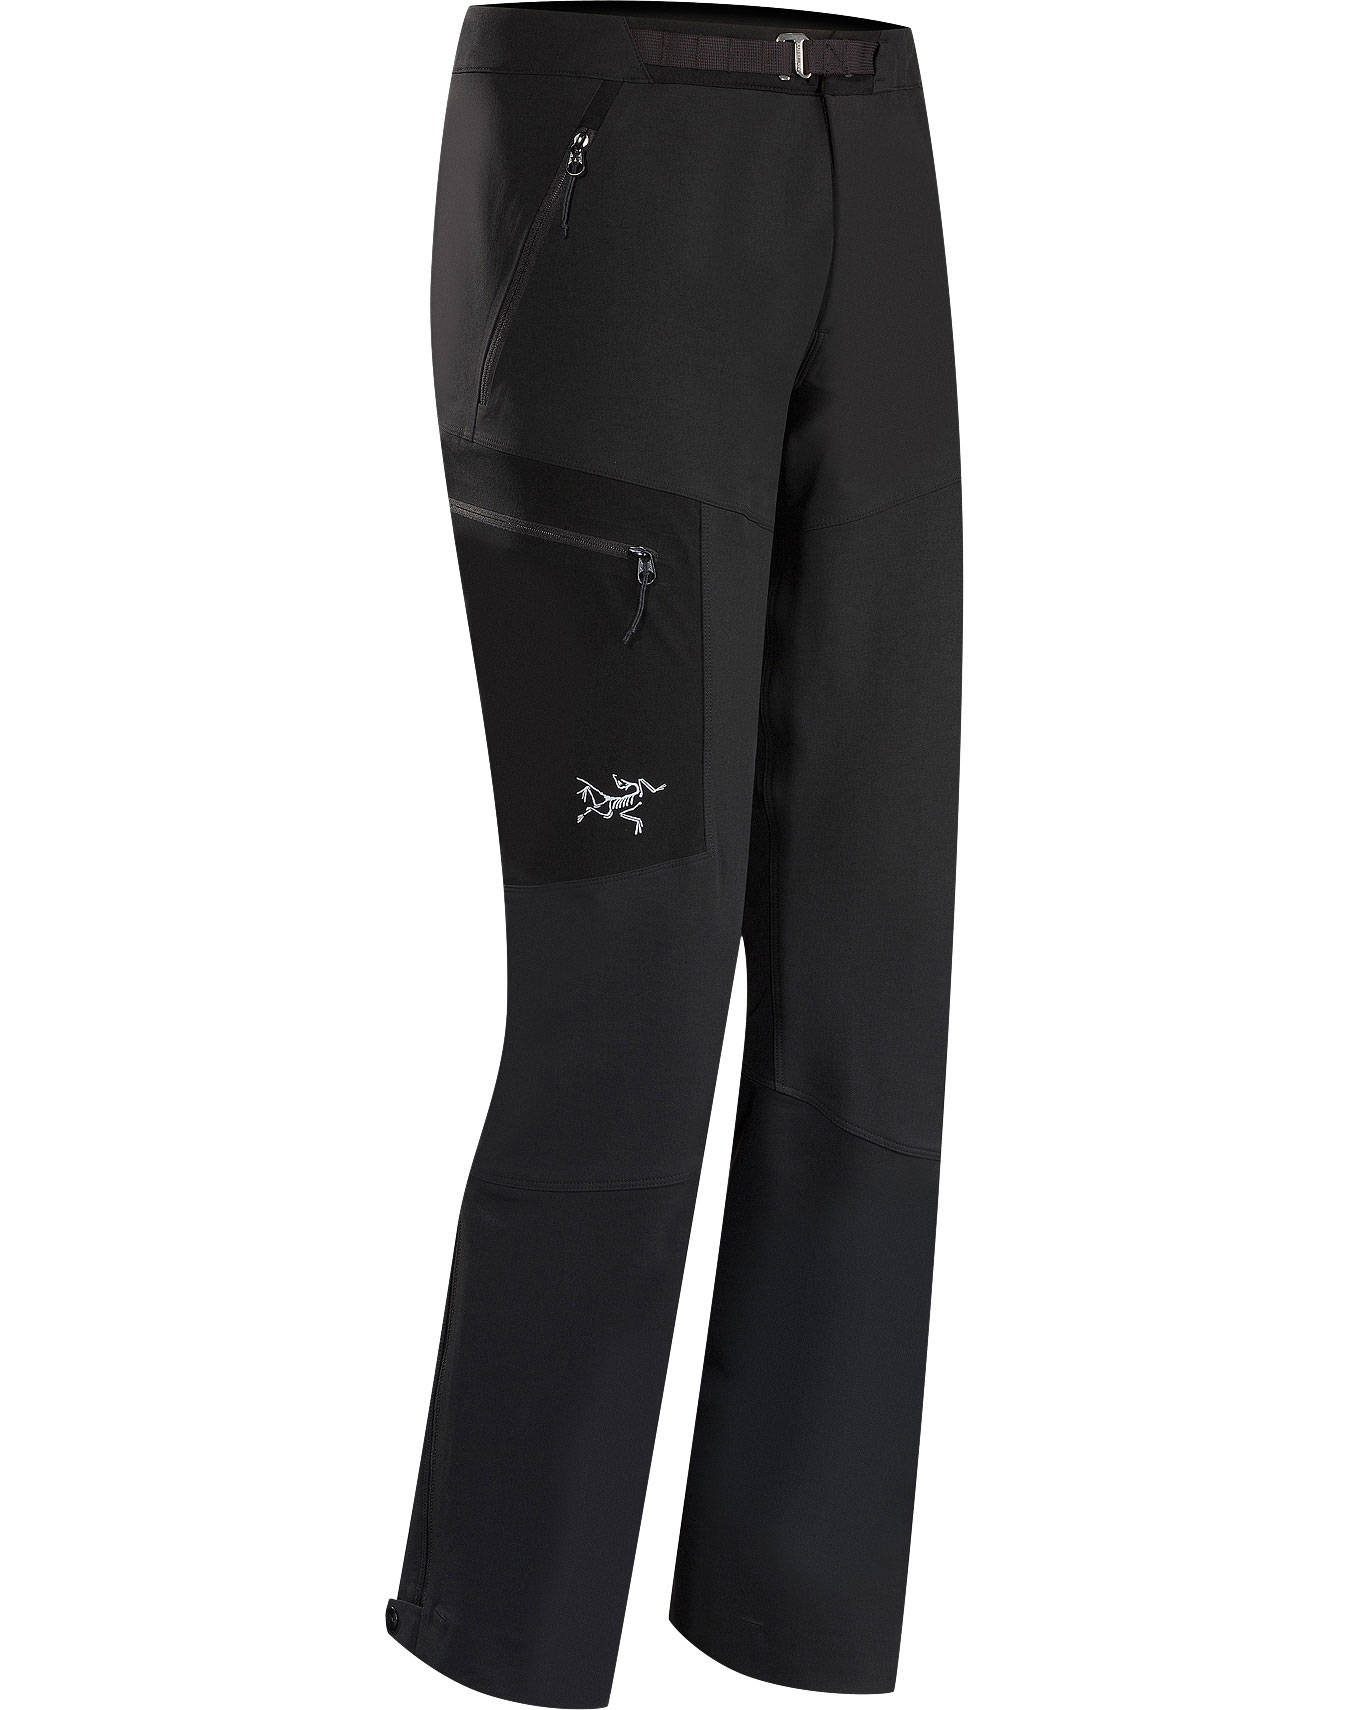 Arc/'Teryx Psiphon AR Pant Black 17243// Men/'s Mountain Clothing  Pants /& Shorts